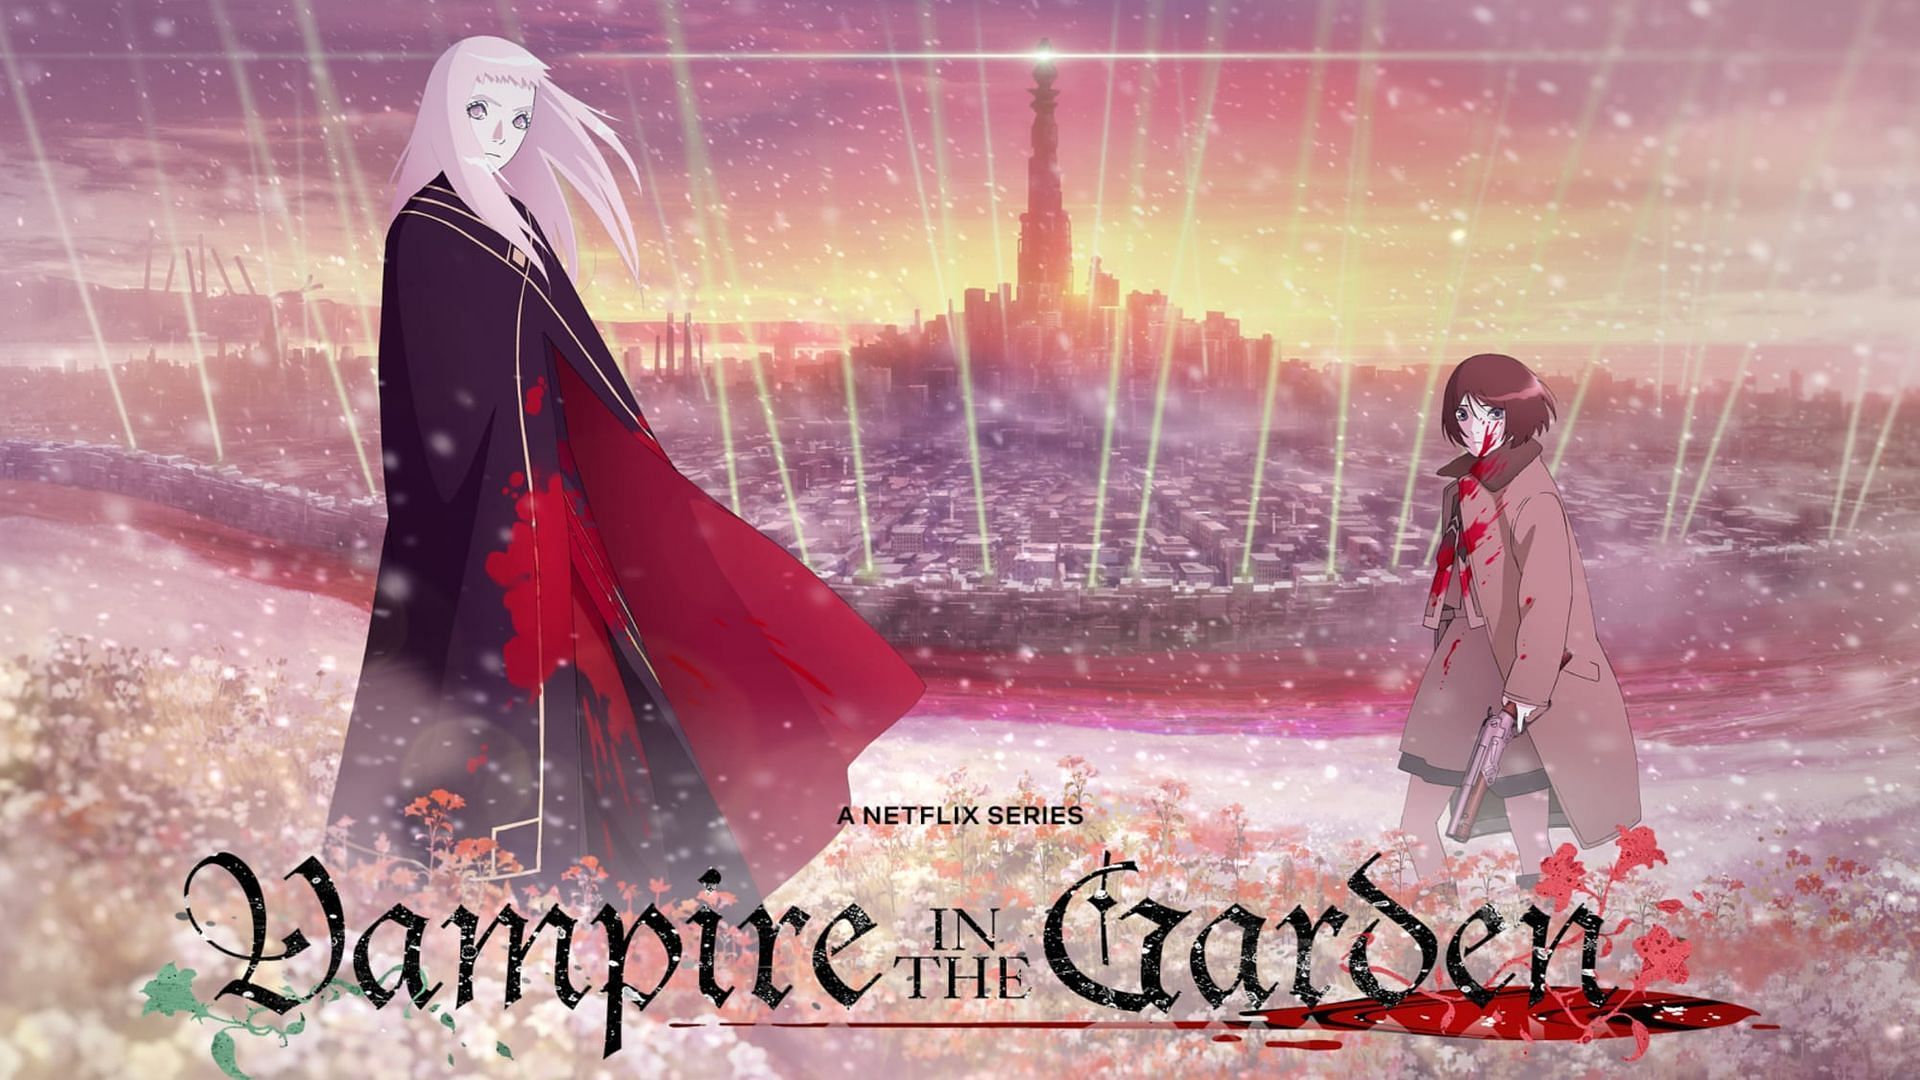 Vampire Anime Strike the Blood Gets New OVA Series Original OVA Episode   AniME